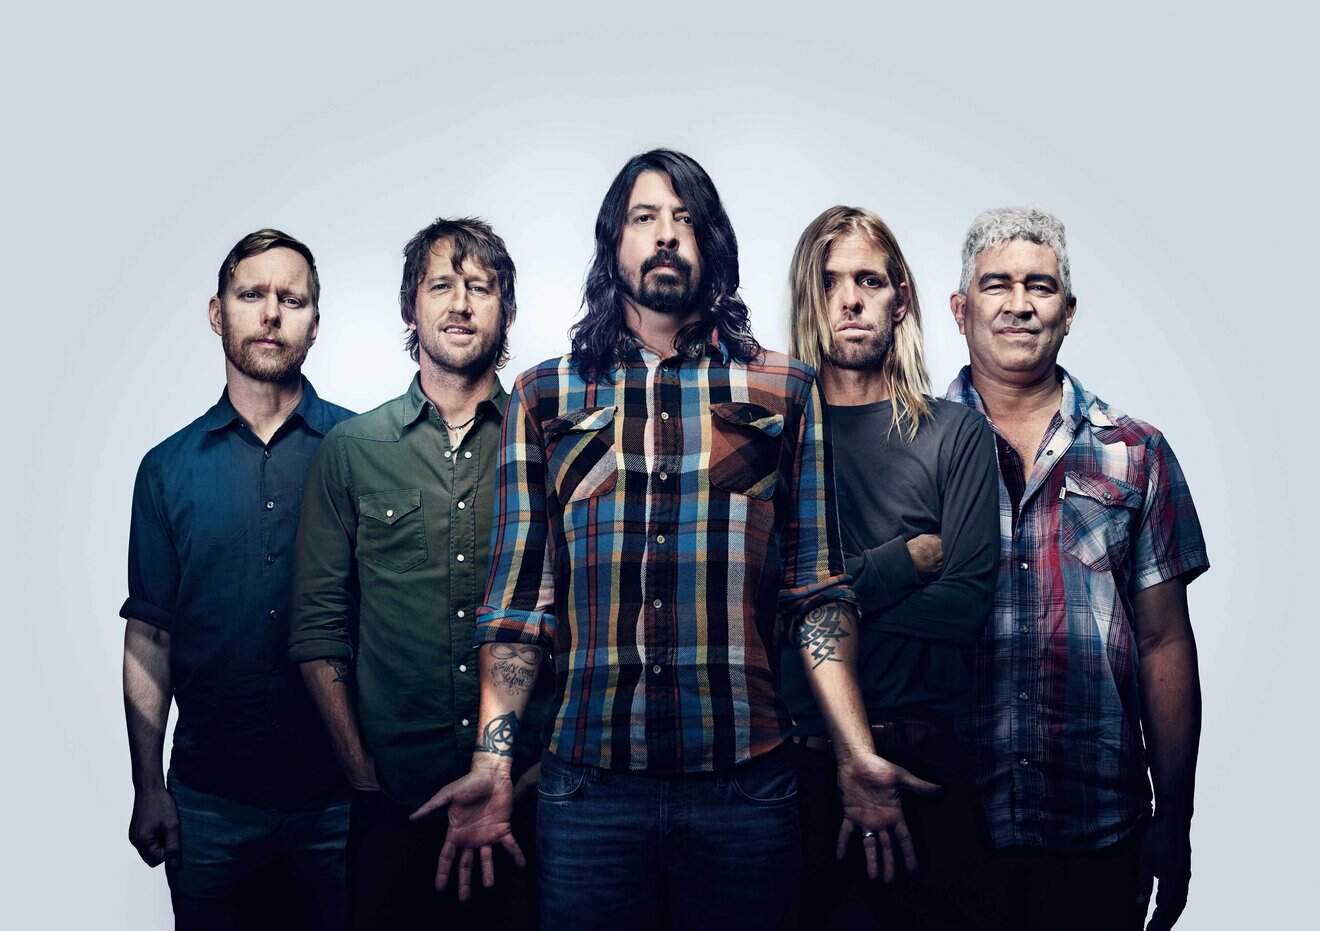 Foo Fighters, Abril.2012 - São Paulo - SP - Brasil - Aprese…